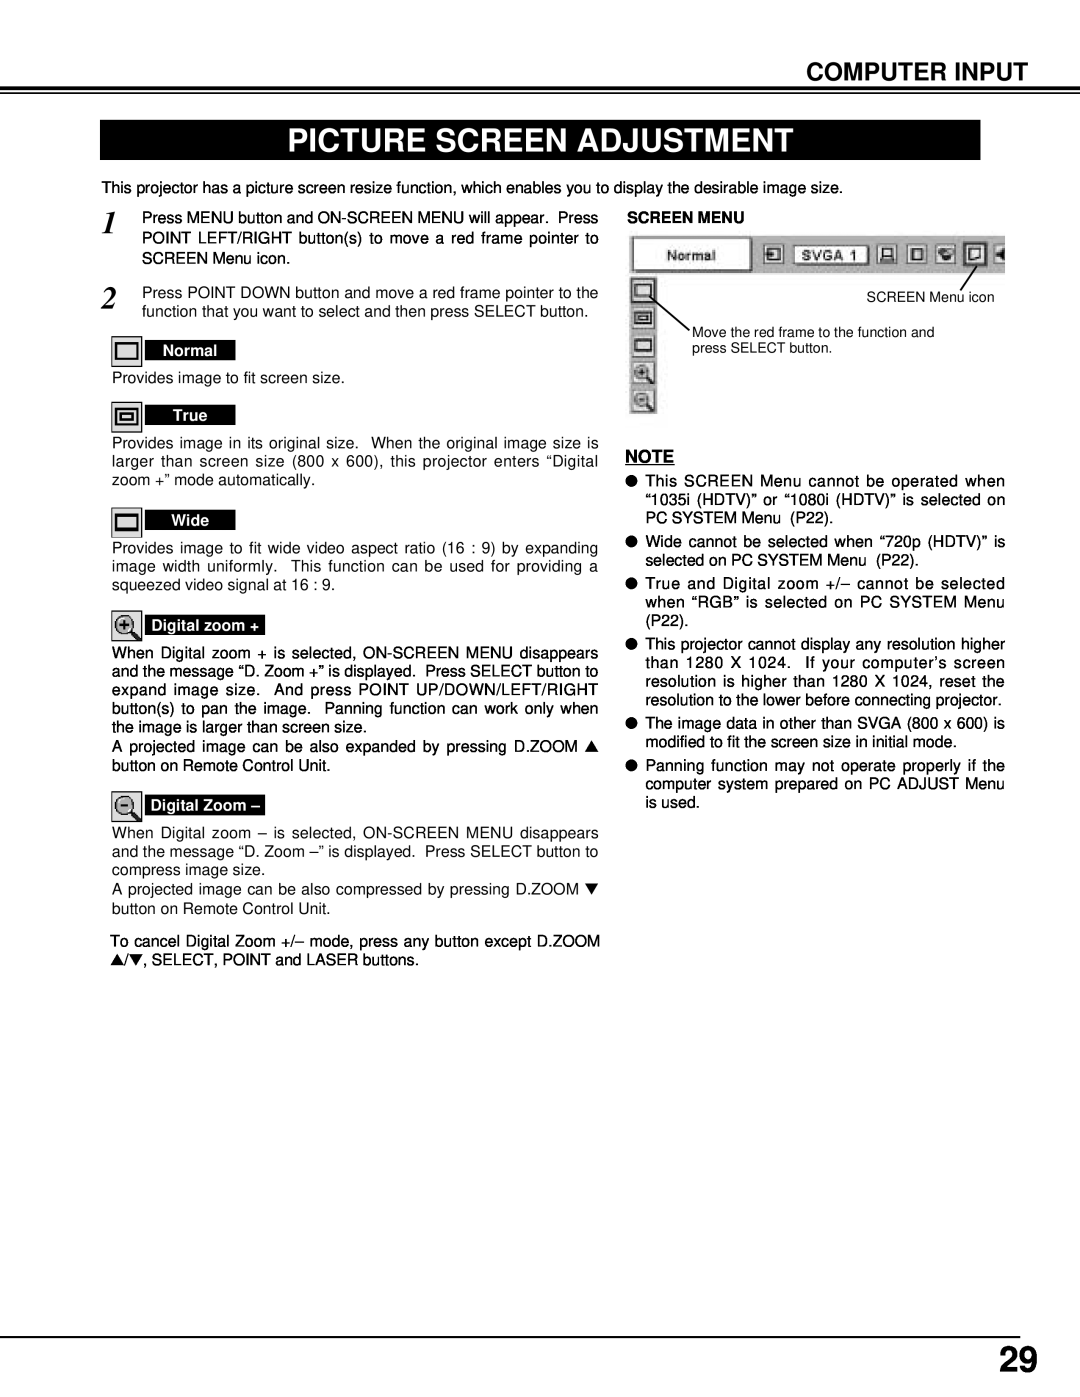 BOXLIGHT cp-12t manual Picture Screen Adjustment, Computer Input, Screen Menu 